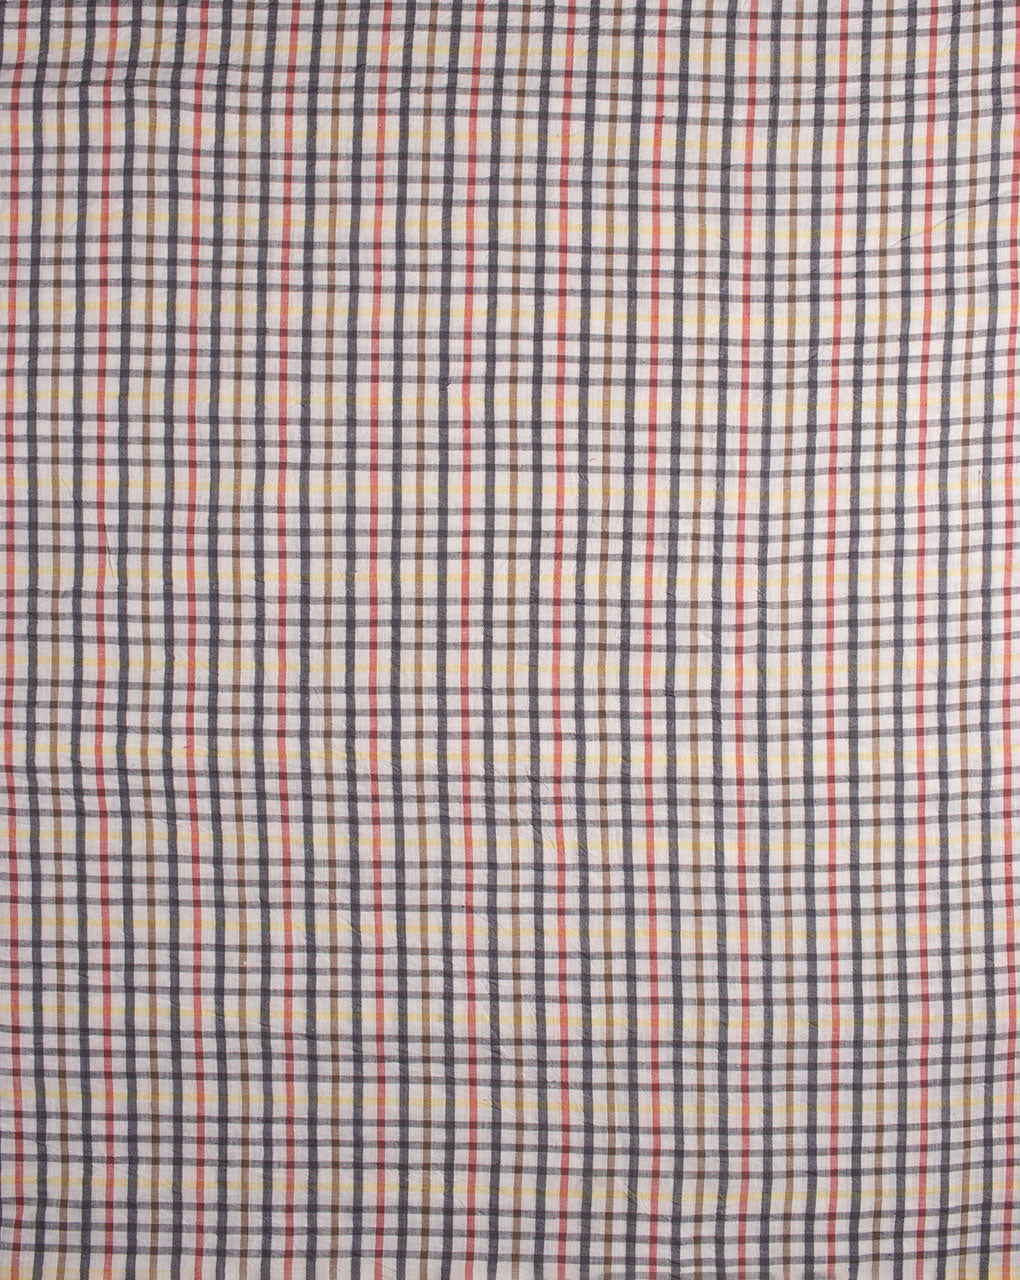 Gingham Checks Seersucker Cotton Fabric - Fabriclore.com